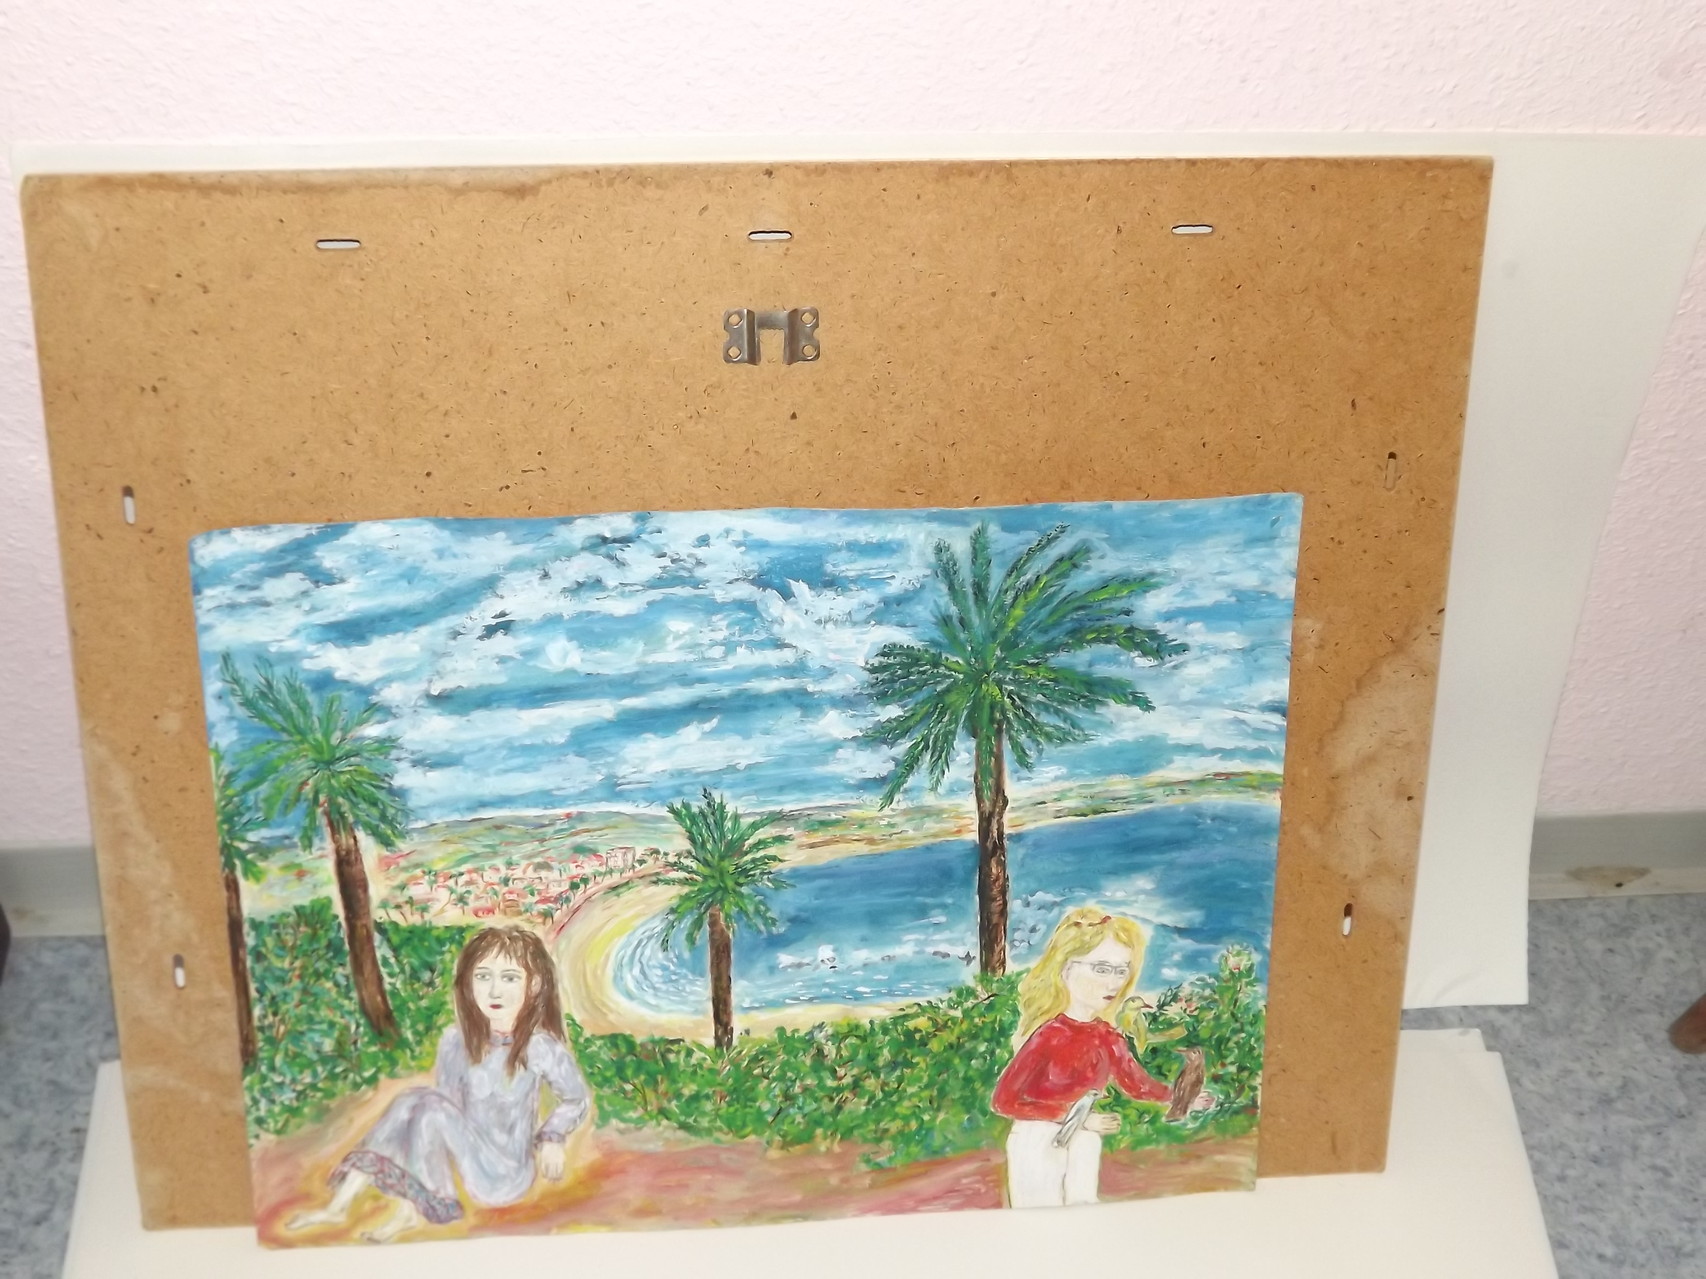 Marokkanischer Strand mit Xenia&Elisabeth. - Näheres dazu später. J. v. D.                                             Preisliche VB > 3.333€ 